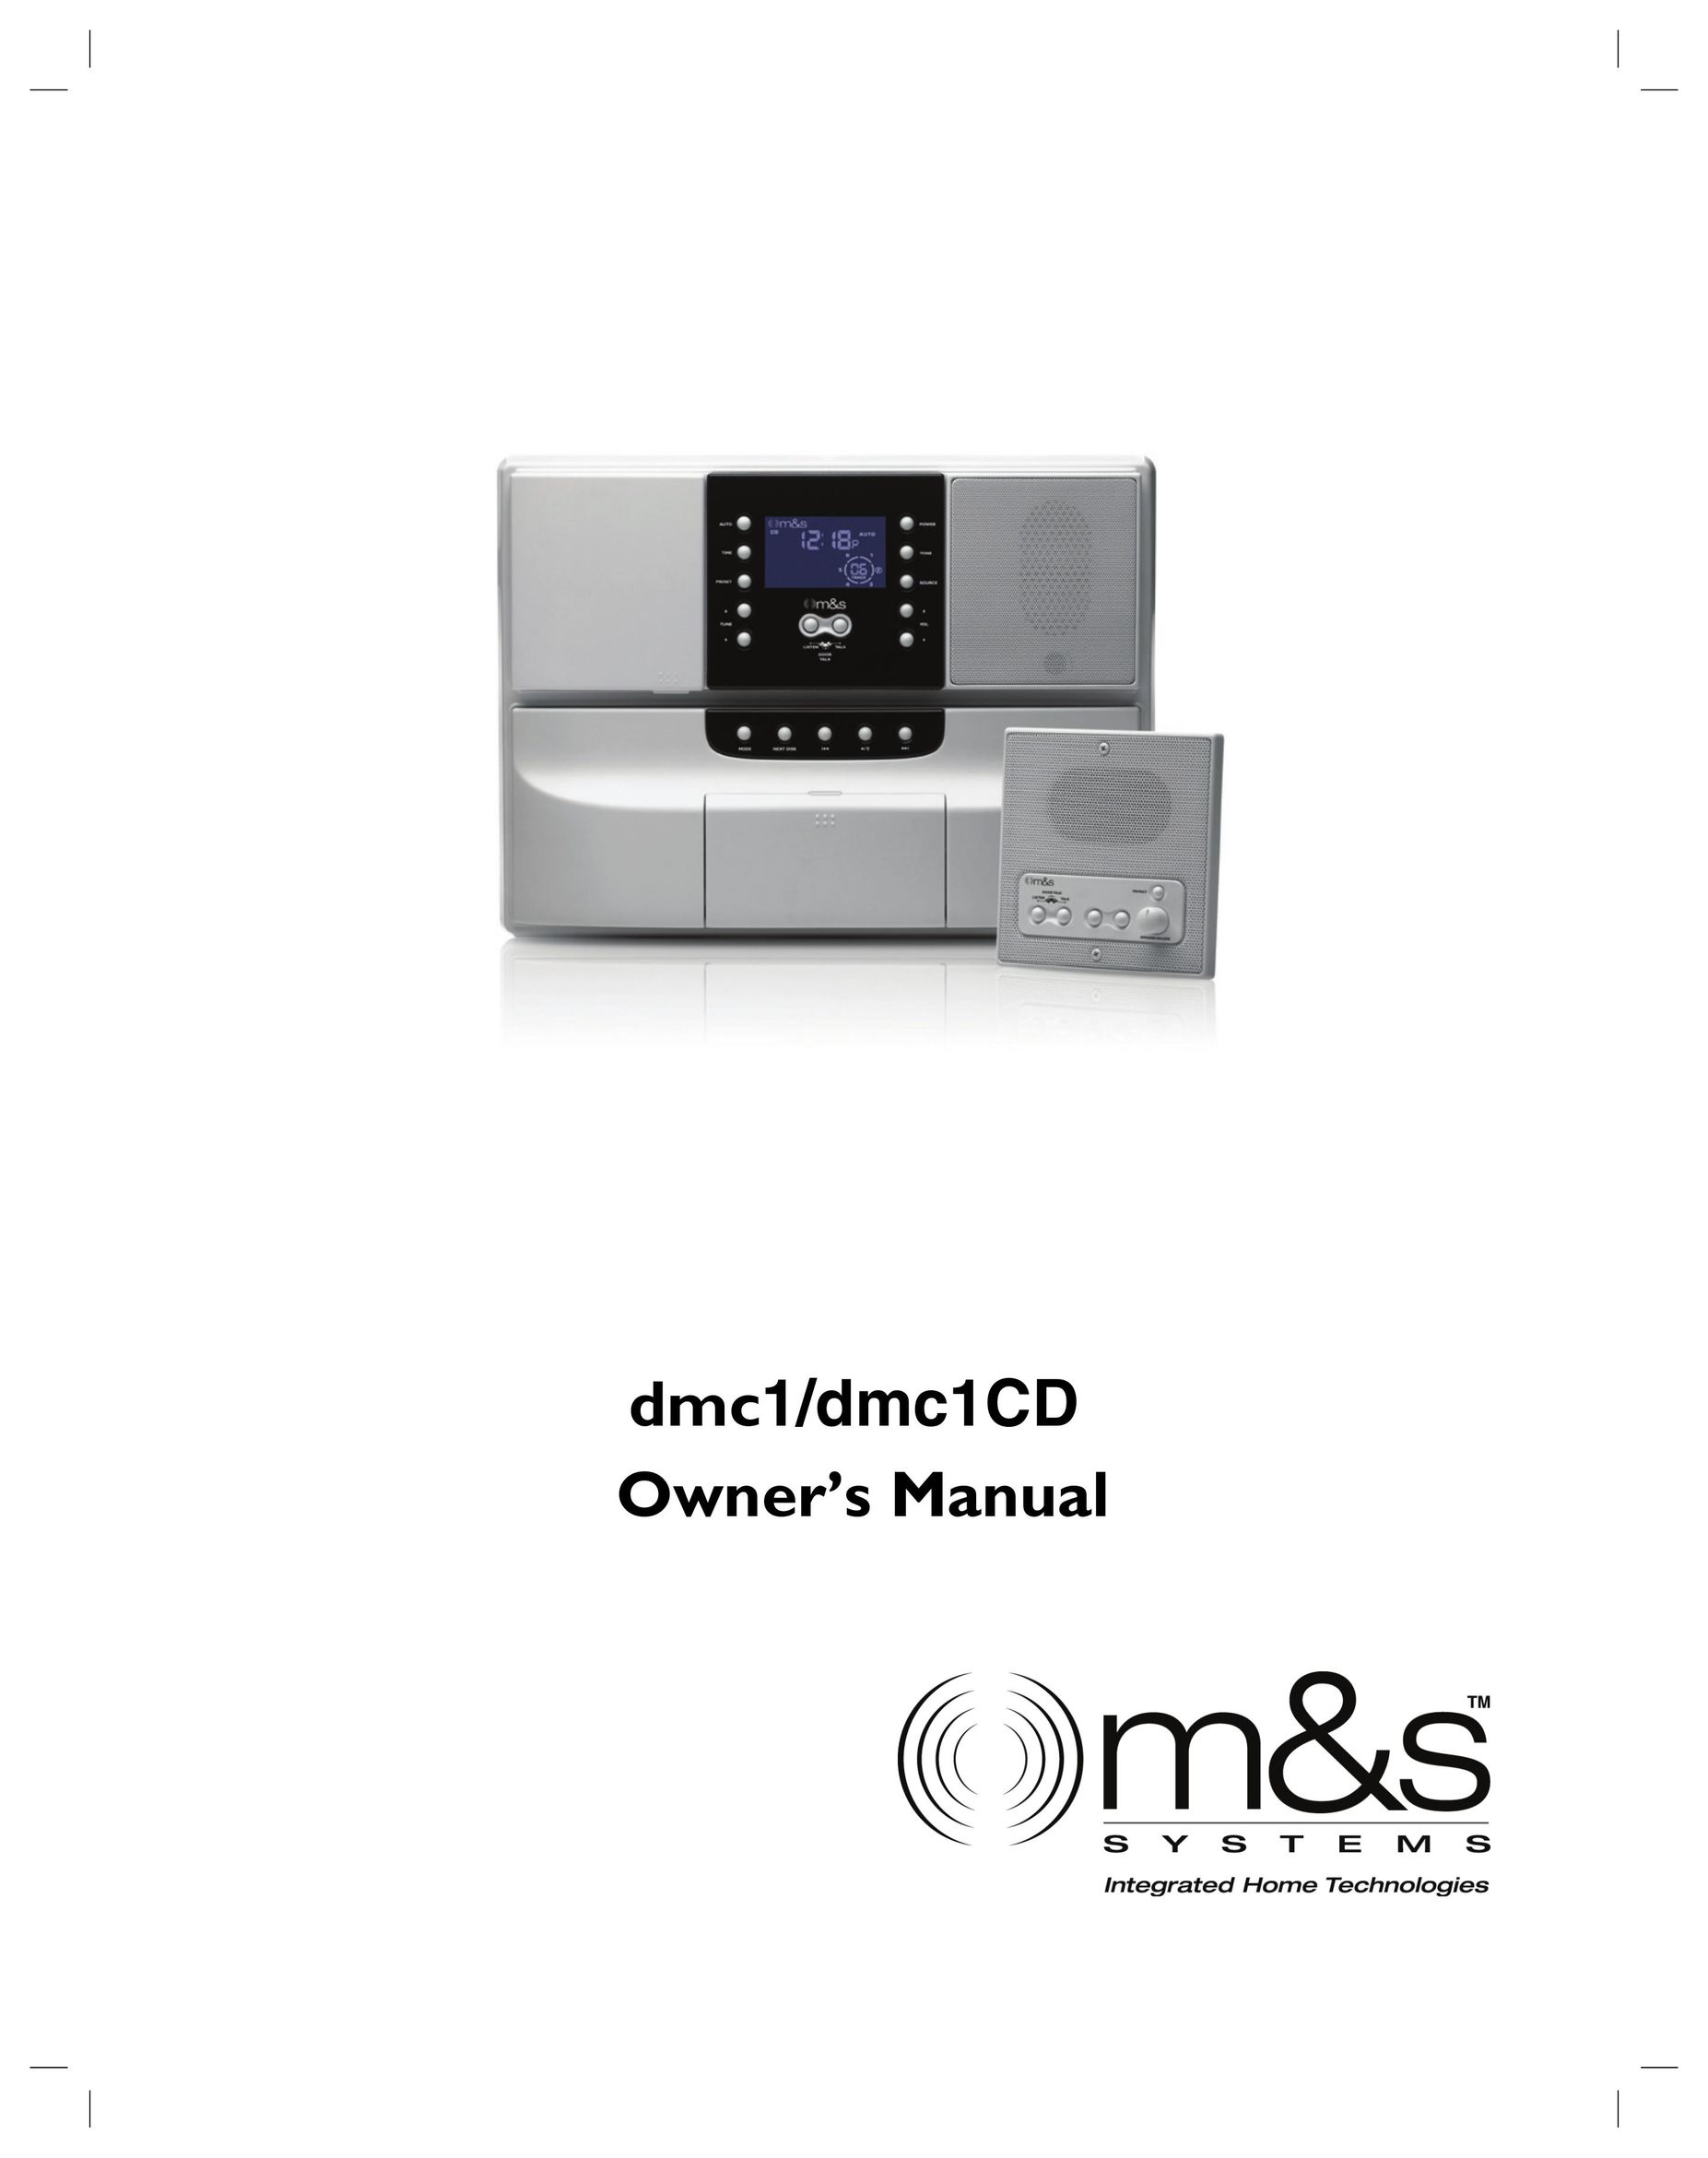 M&S Systems dmc1/dmc1CD Portable Speaker User Manual (Page 1)